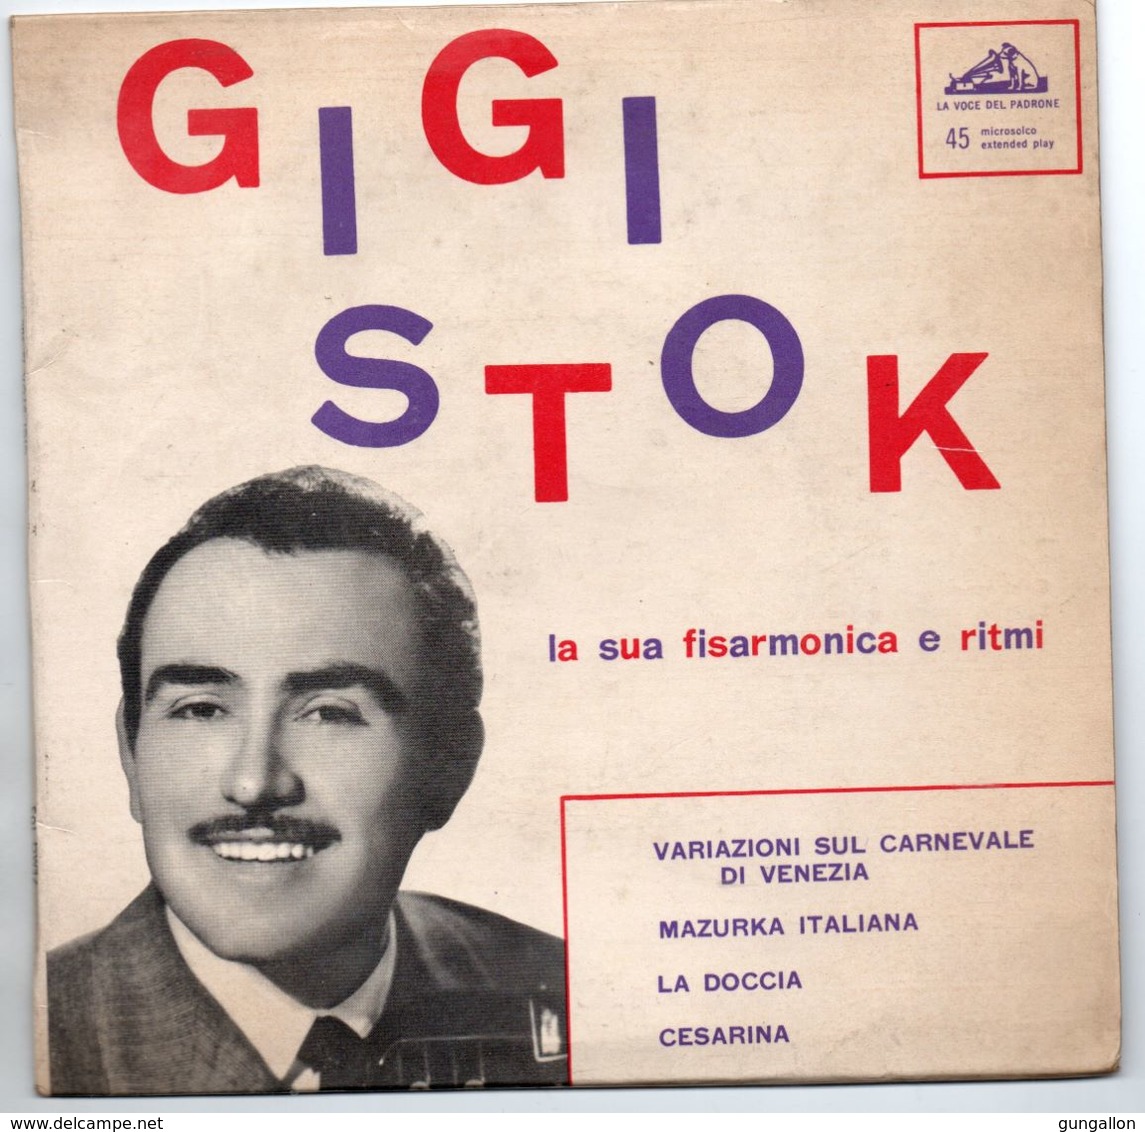 Gigi Stok(1959)  "Mazurka Italiana  -  La Doccia  -  Cesarina" - Strumentali